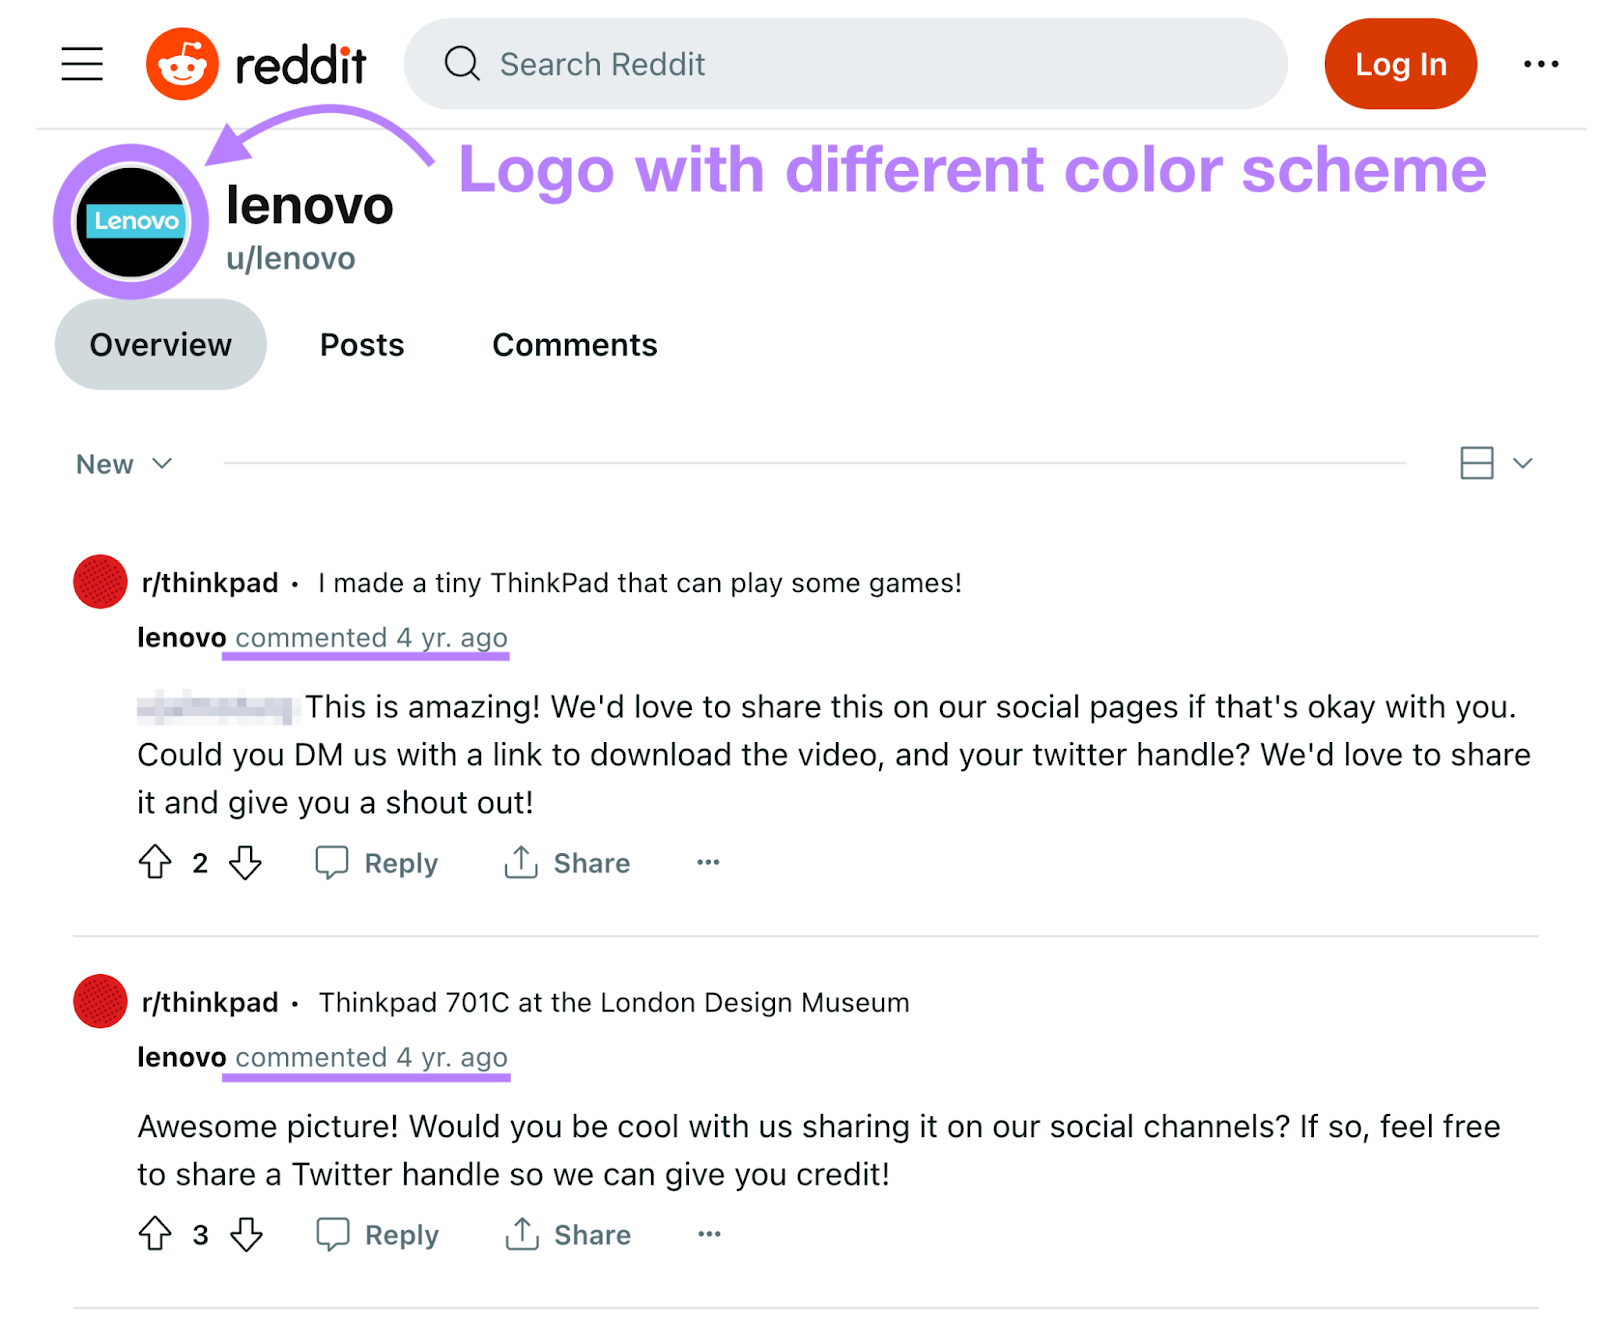 Lenovo Reddit account